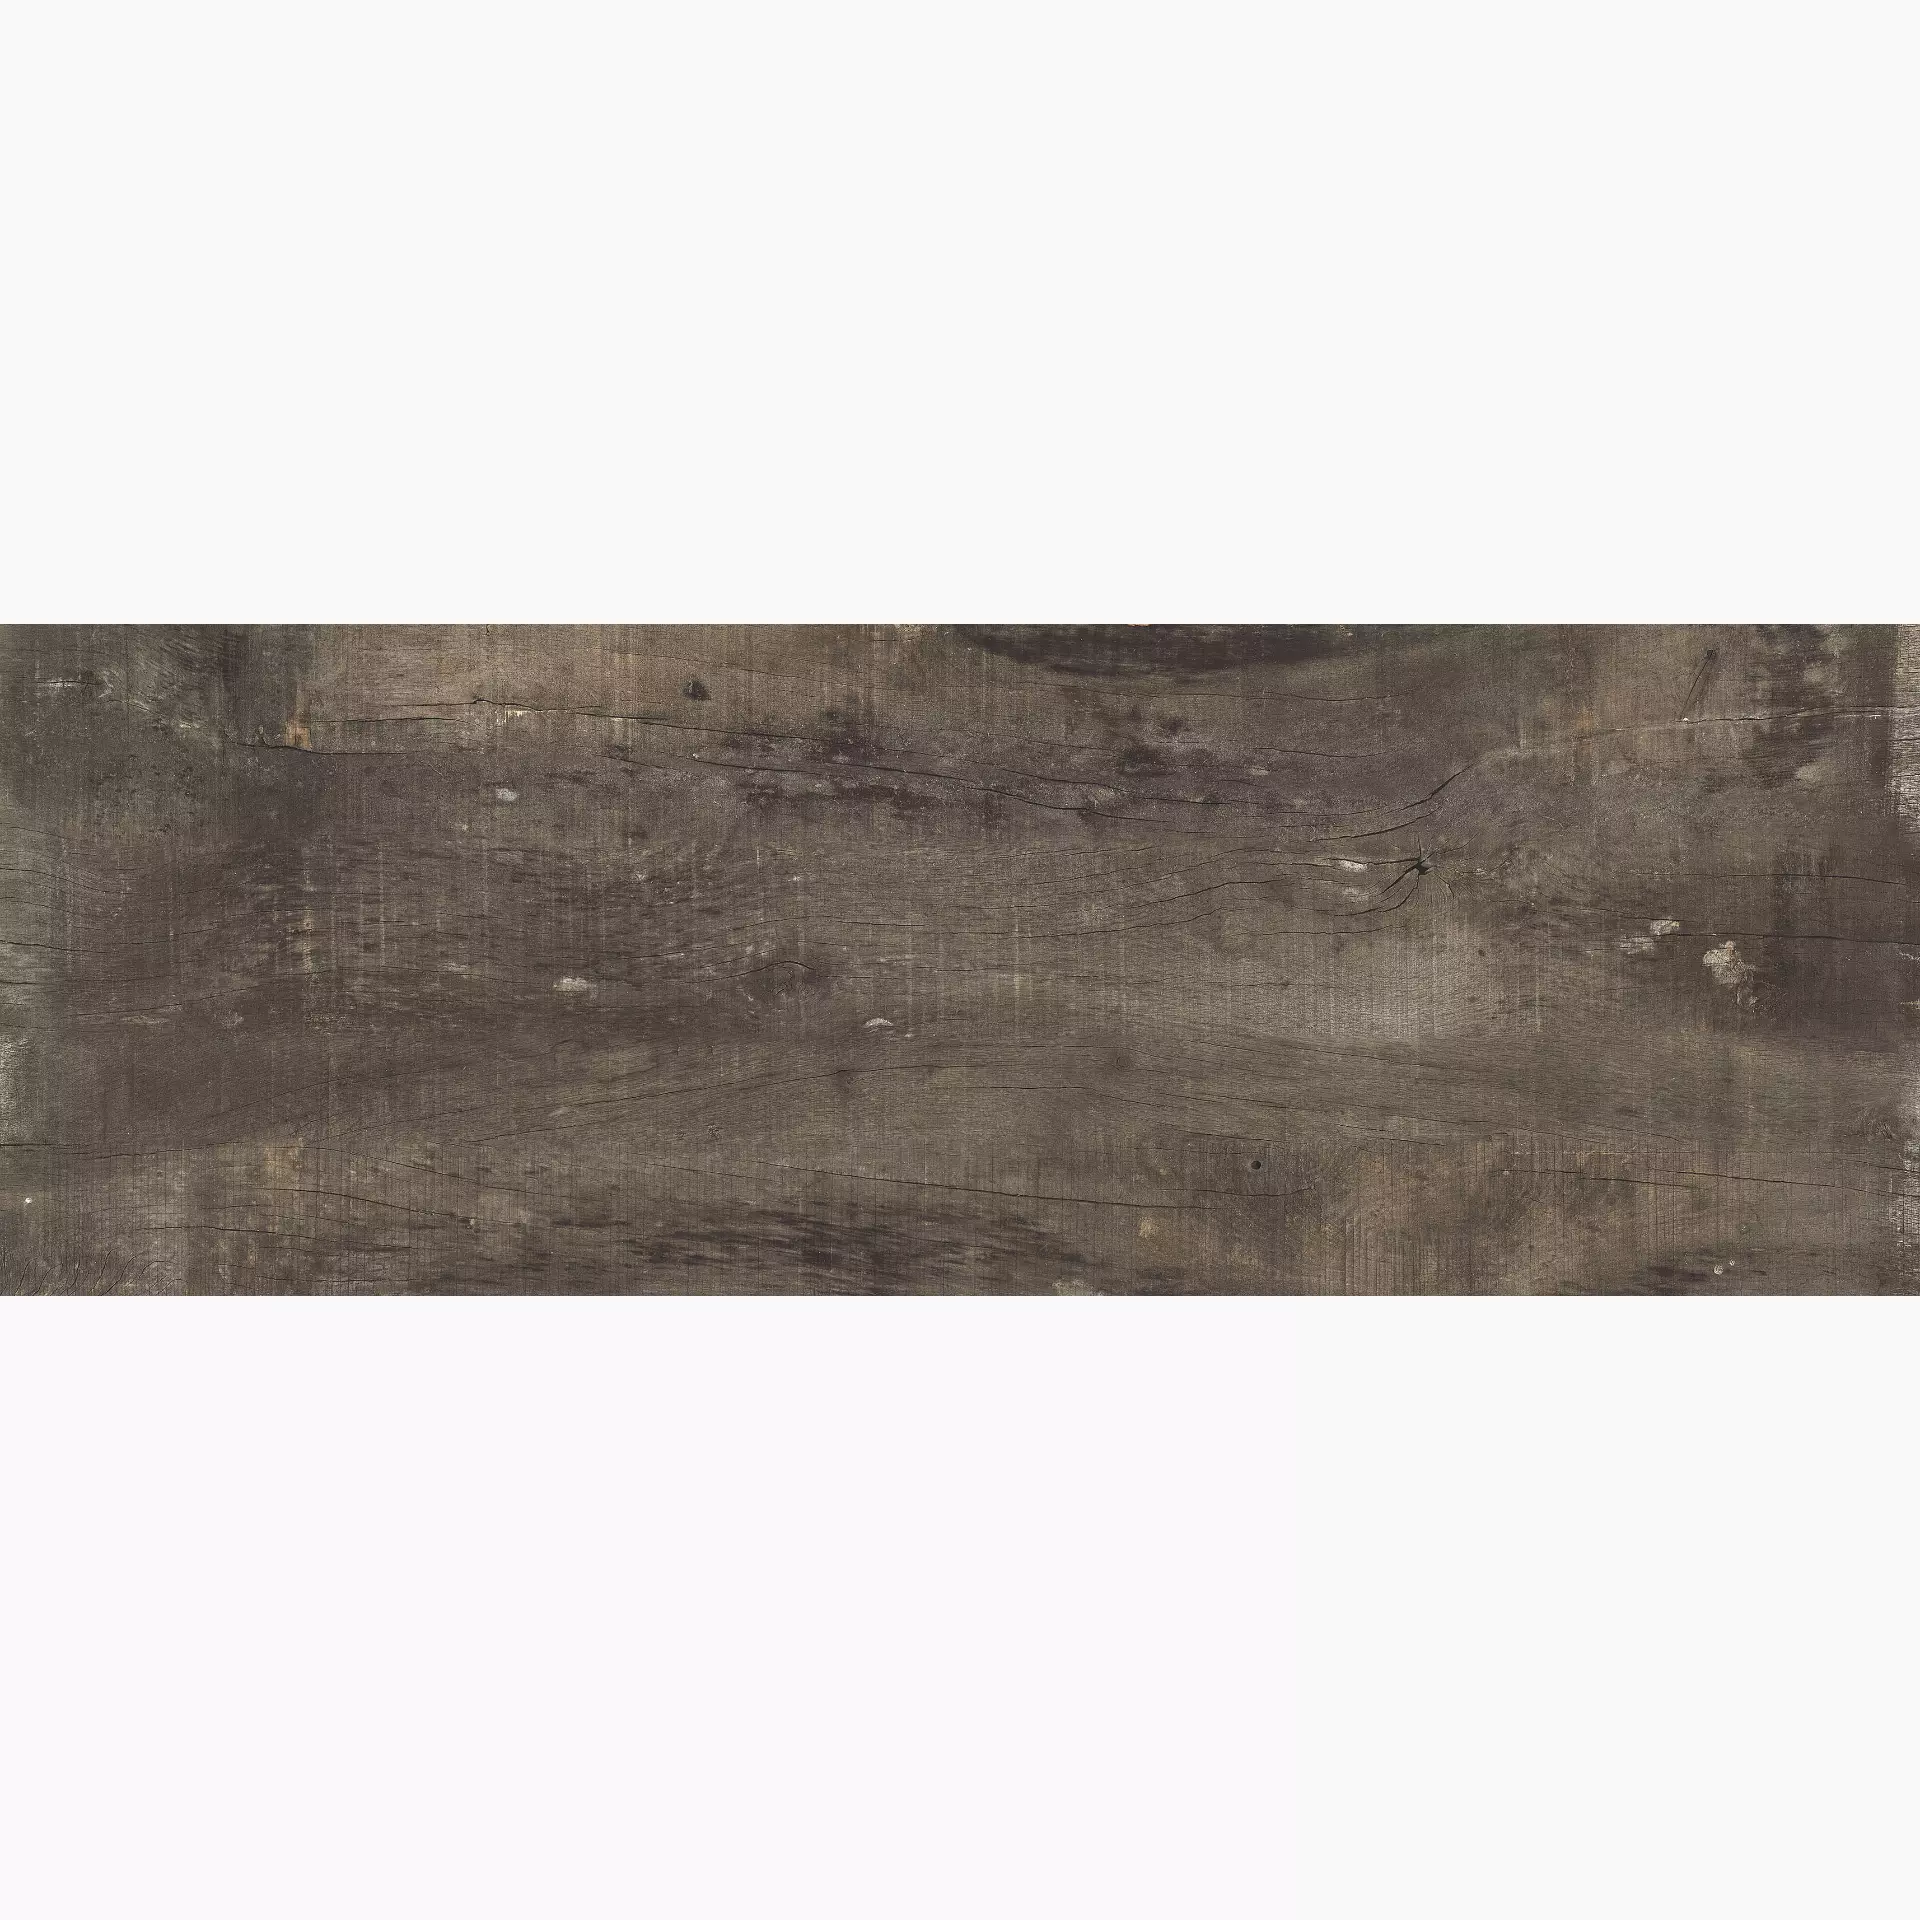 La Faenza Nirvana Black Natural Slate Cut Matt 168483 60x180cm rectified 10mm - NIRVANA 18N